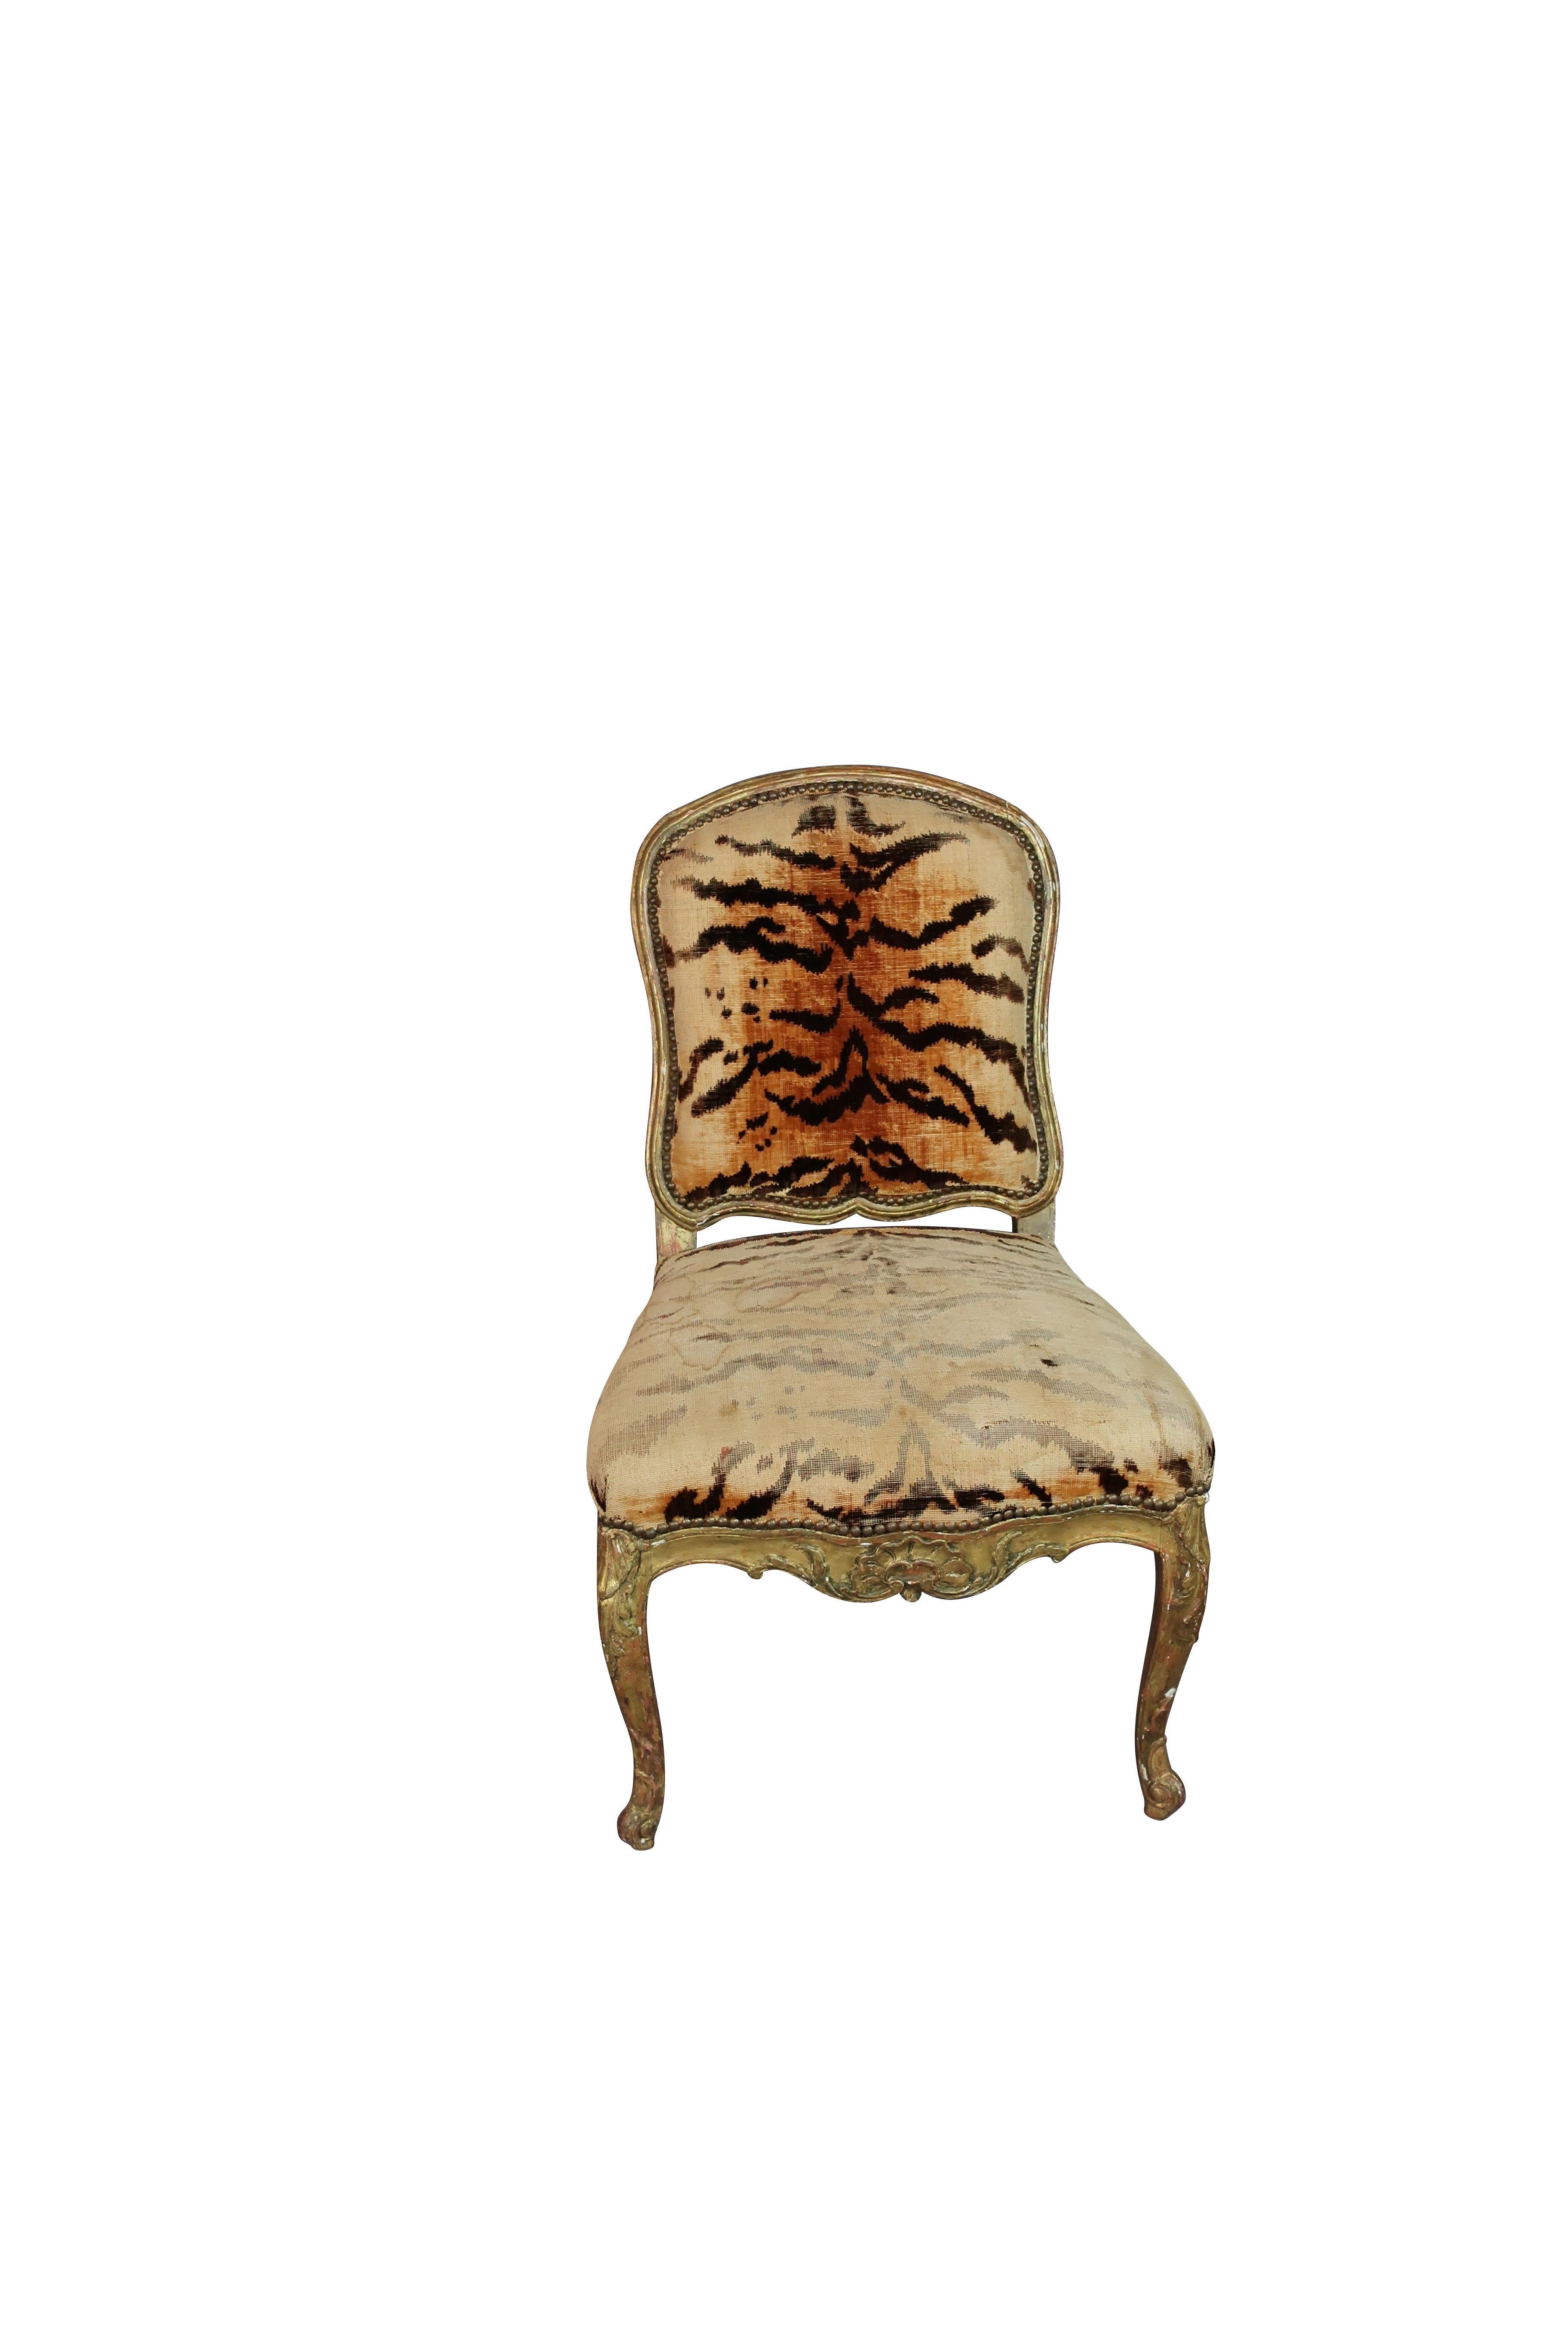 Wood Italian Hand Carved Florentine Gilt Chairs with Original Animal Print Fabric